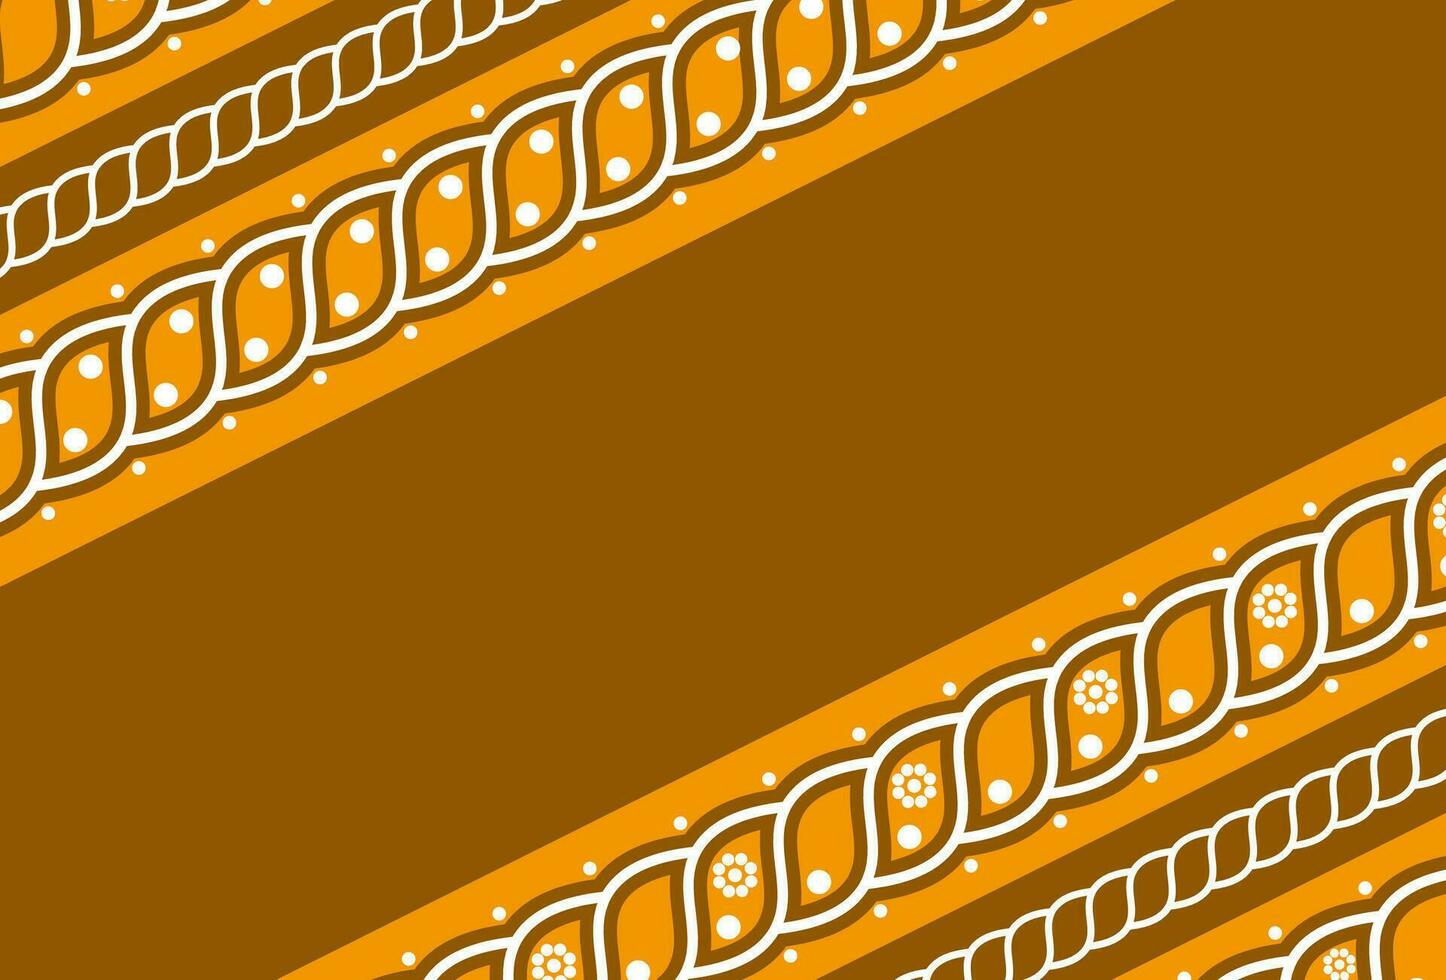 modelo de estampado batik, marrón, blanco, adecuado para fondo, decoración, patrón, pantalla impresión, motivos, camisas, ropa, impresión, papel, cartulina, bolsas, etc. vector